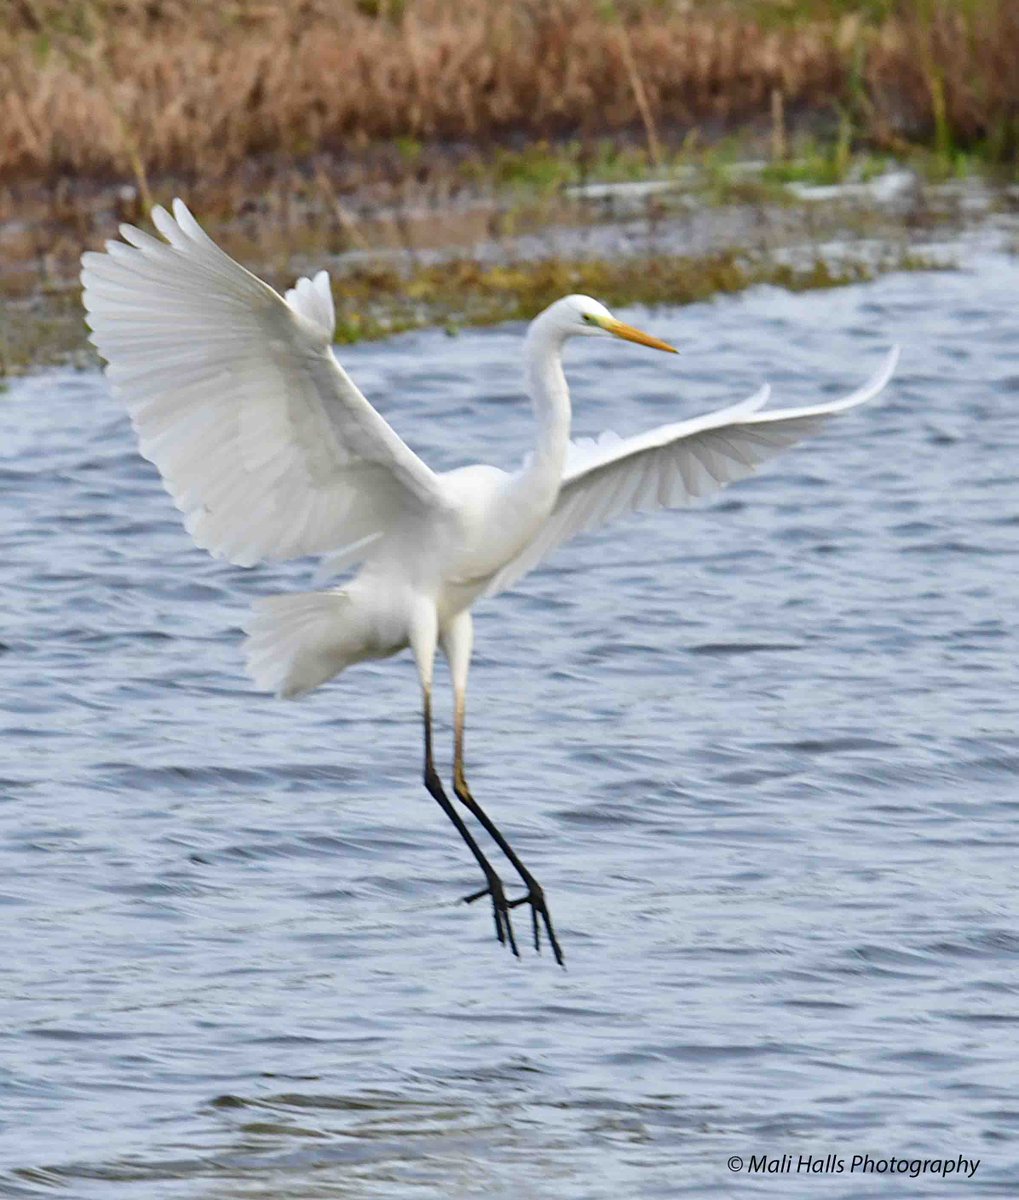 Great White Egret. #BirdTwitter #Nature #Photography #wildlife #birds #TwitterNatureCommunity #birding #NaturePhotography #birdphotography #WildlifePhotography #Nikon